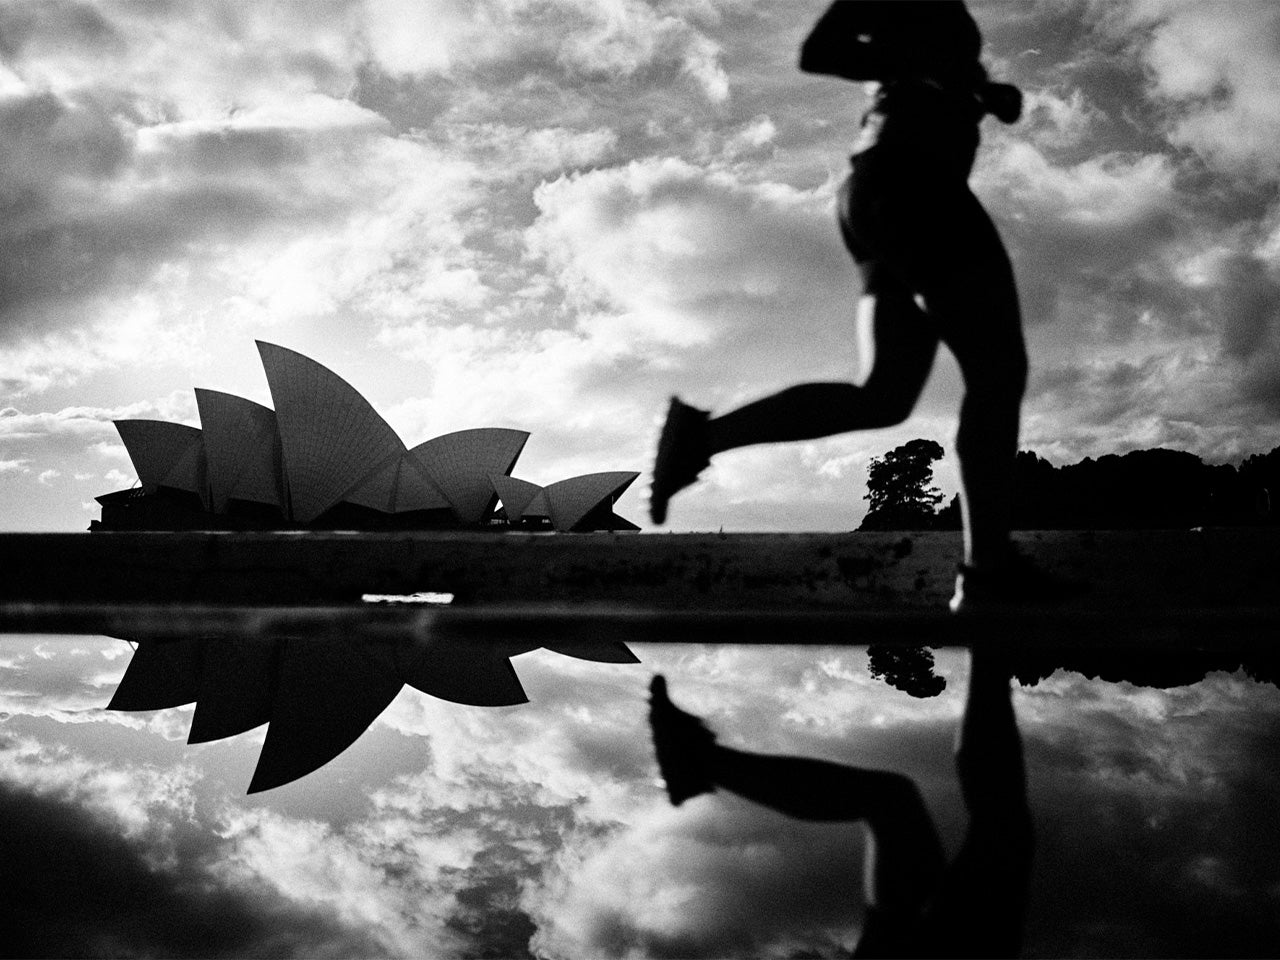 A runner running past the Sydney Opera House